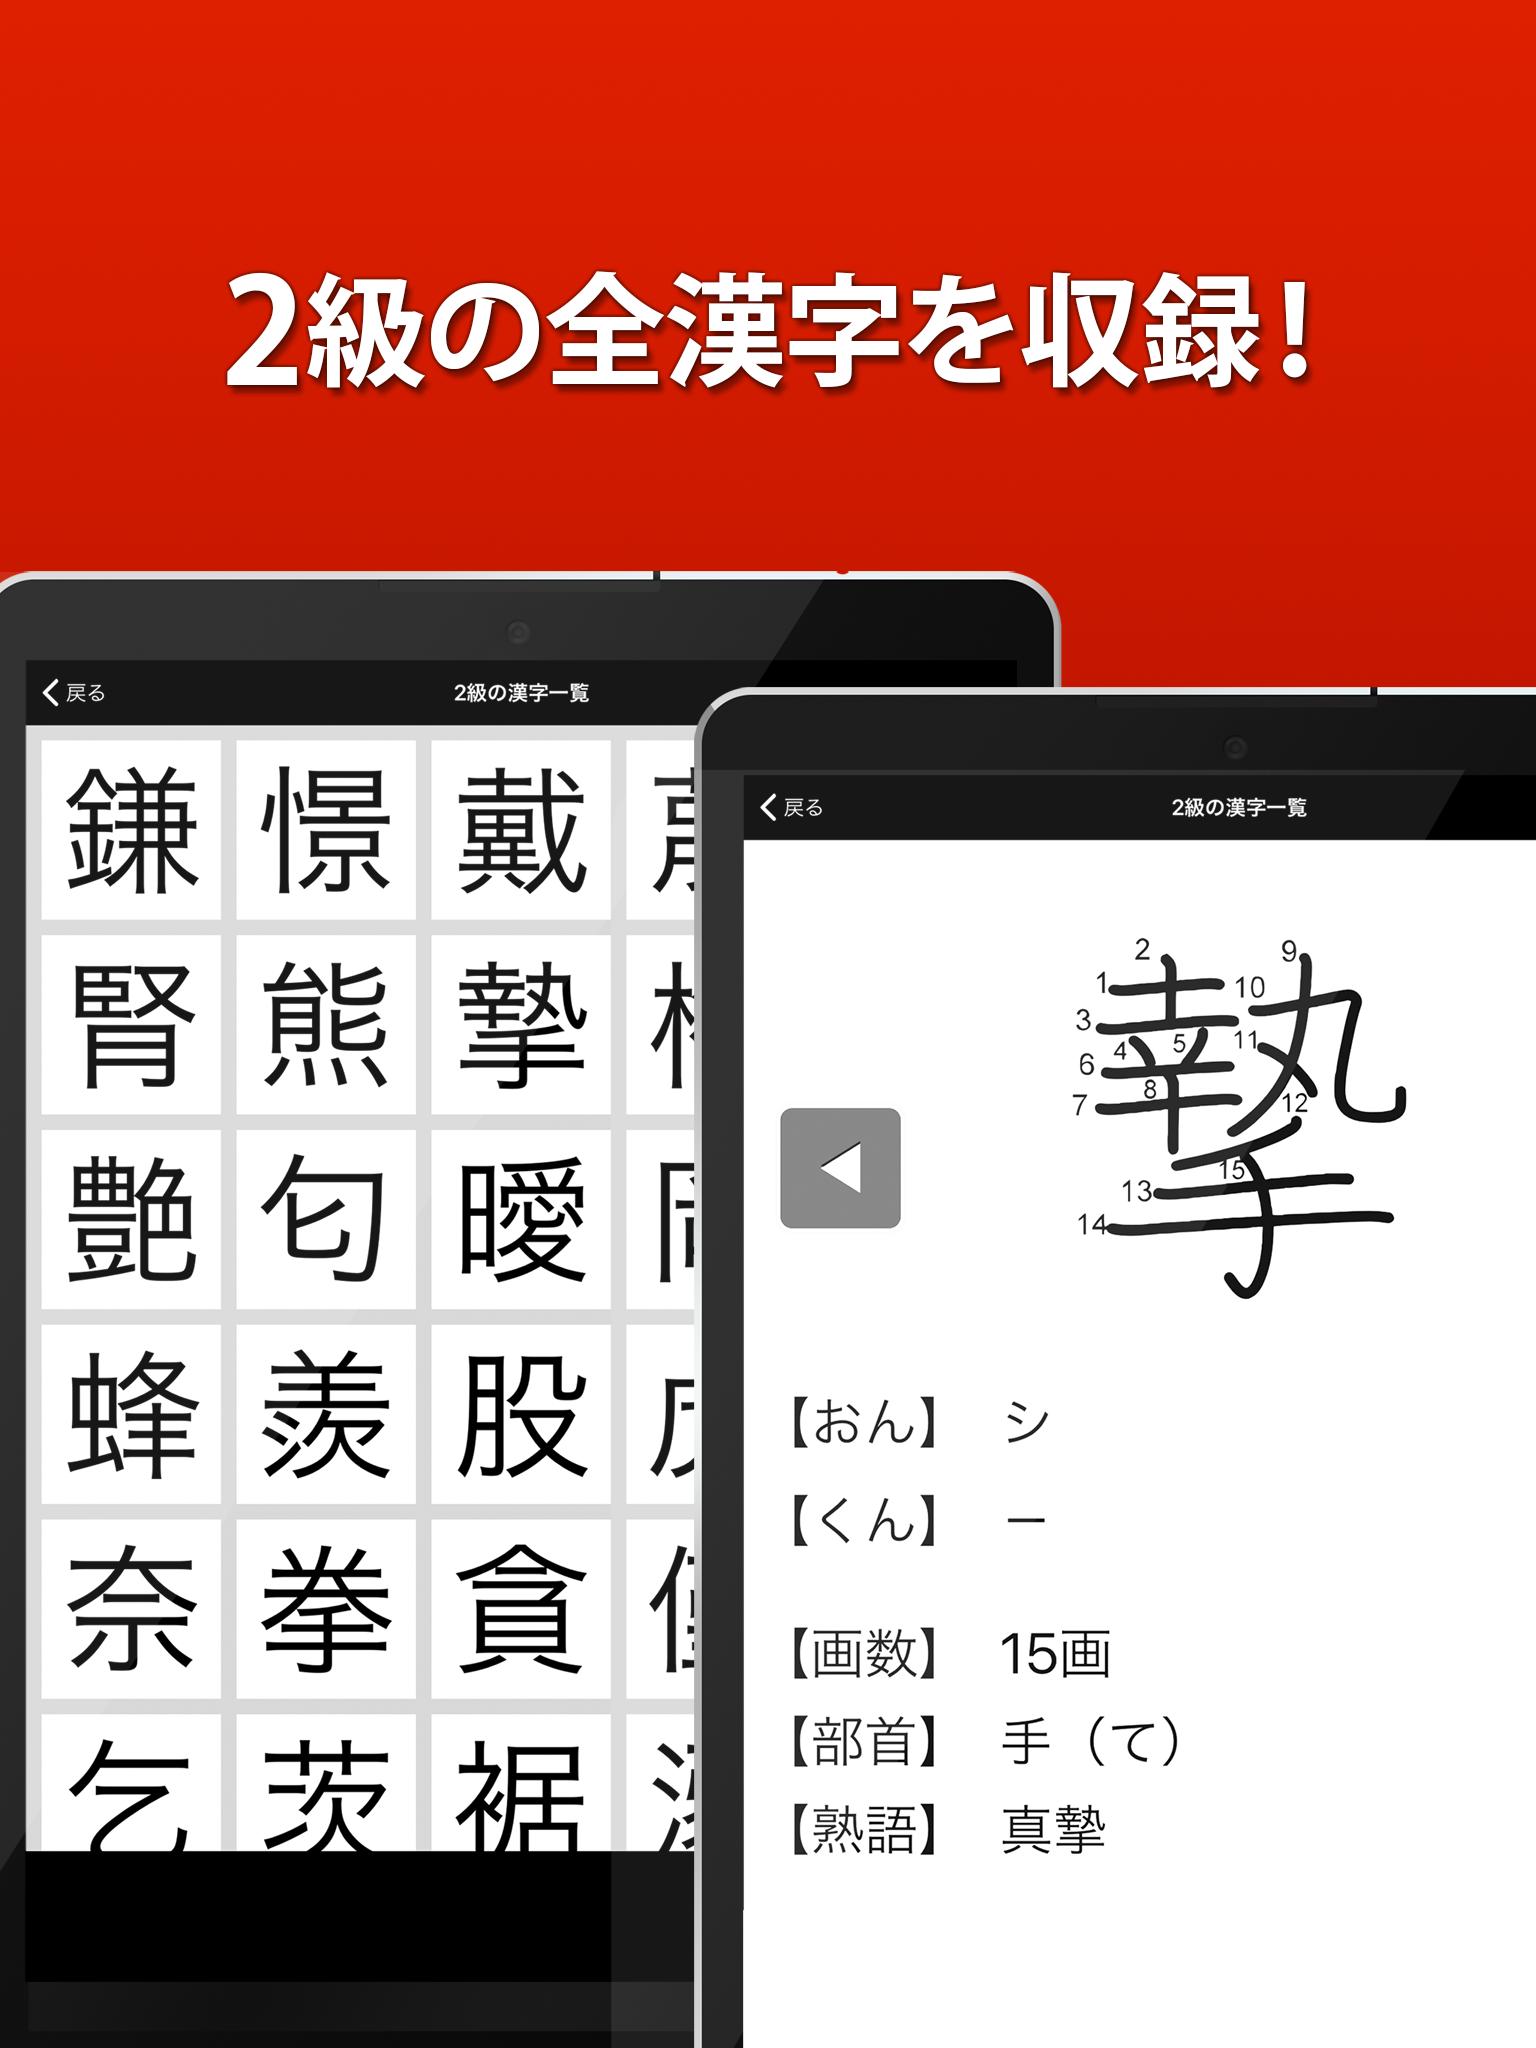 Android용 漢検2級 無料 漢字検定問題集 Apk 다운로드